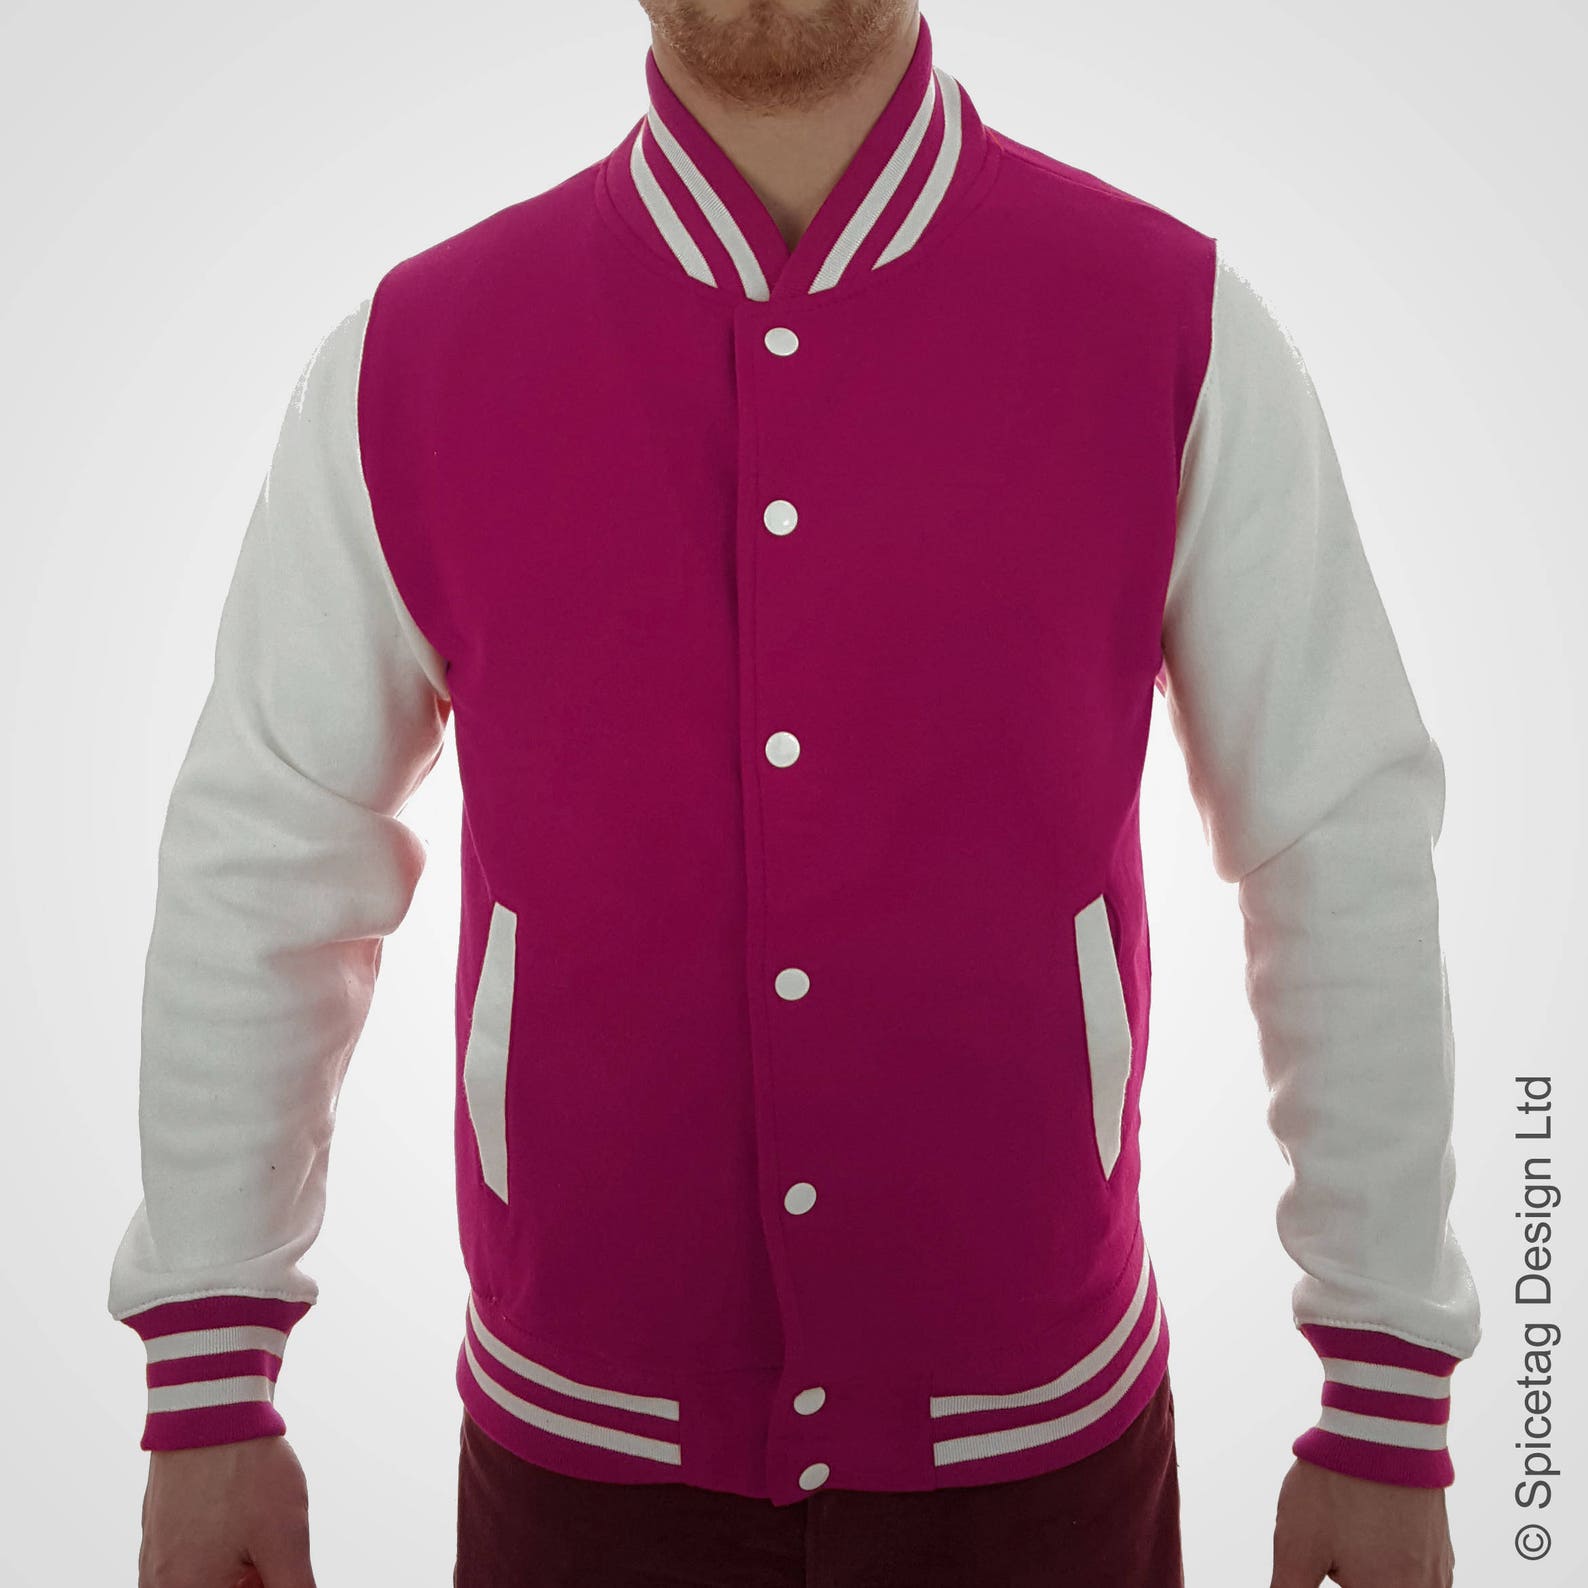 Hot Pink Varsity Jacket Electric College Letterman Coat - Etsy